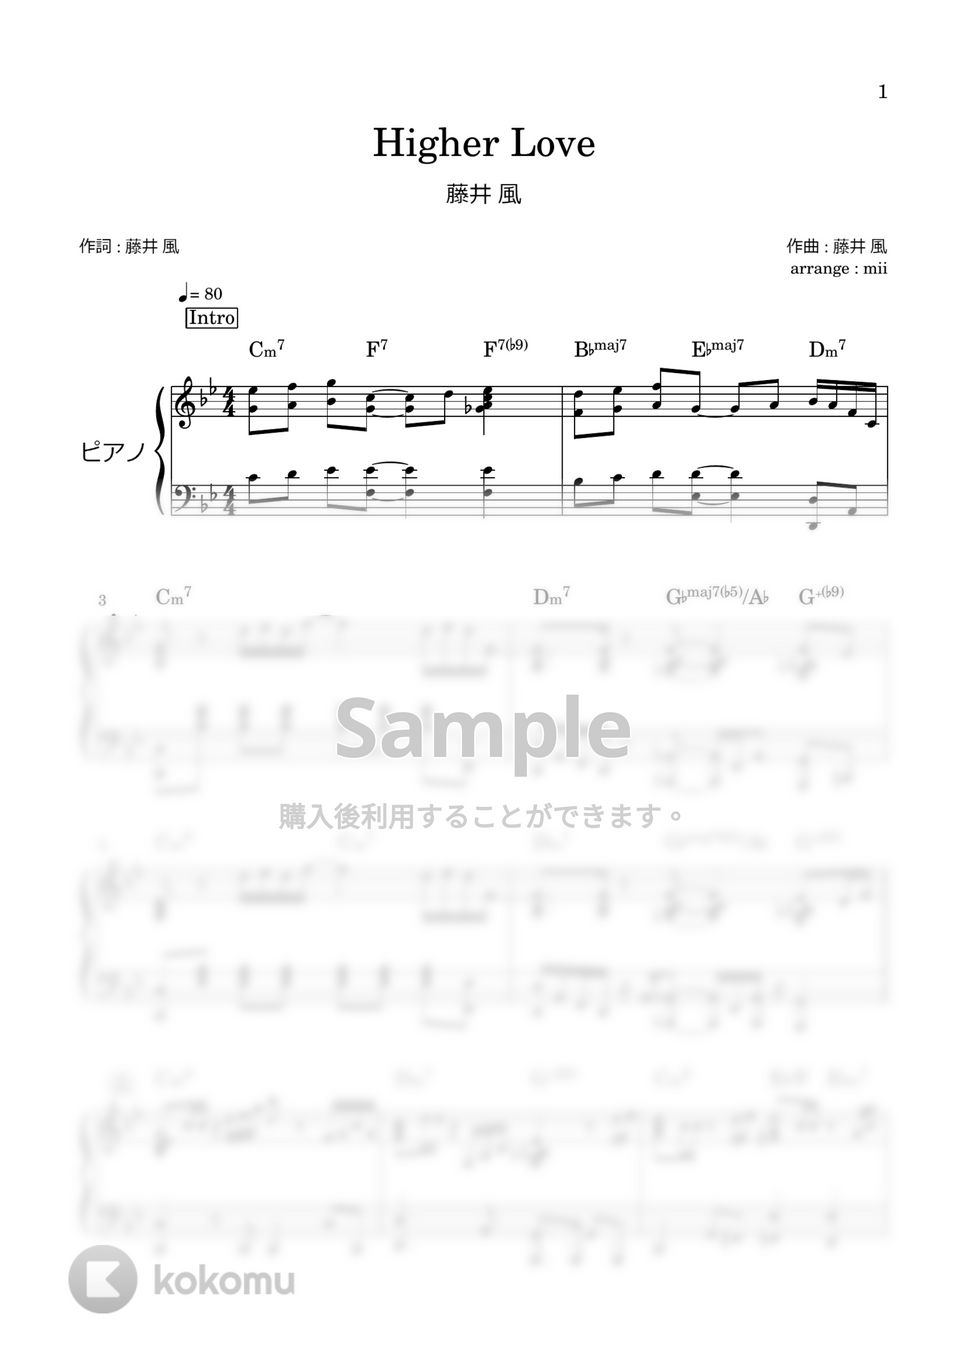 MISIA - Higher Love (藤井風弾き語りver.) by miiの楽譜棚